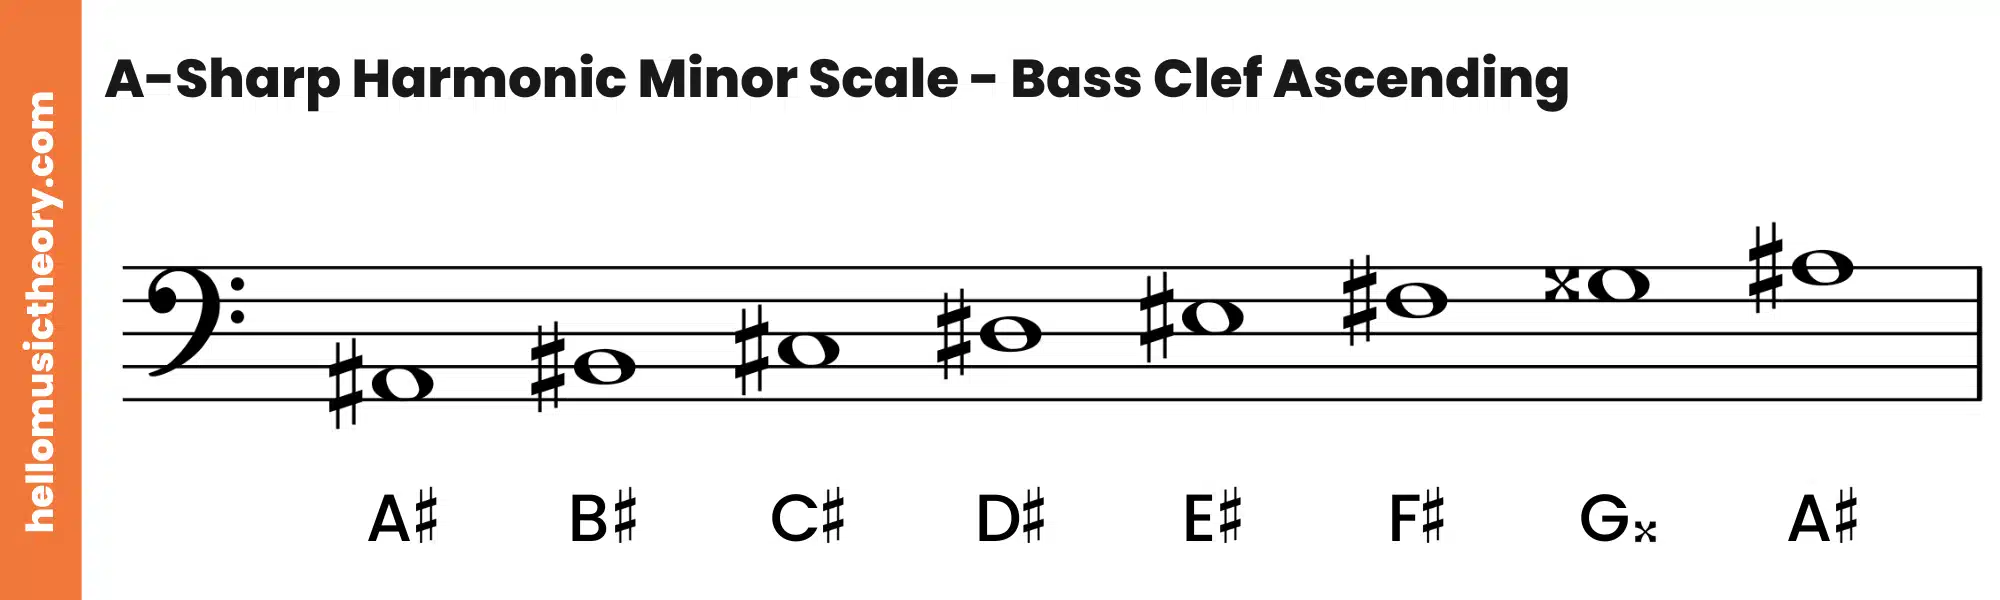 A-Sharp Harmonic Minor Scale Bass Clef Ascending